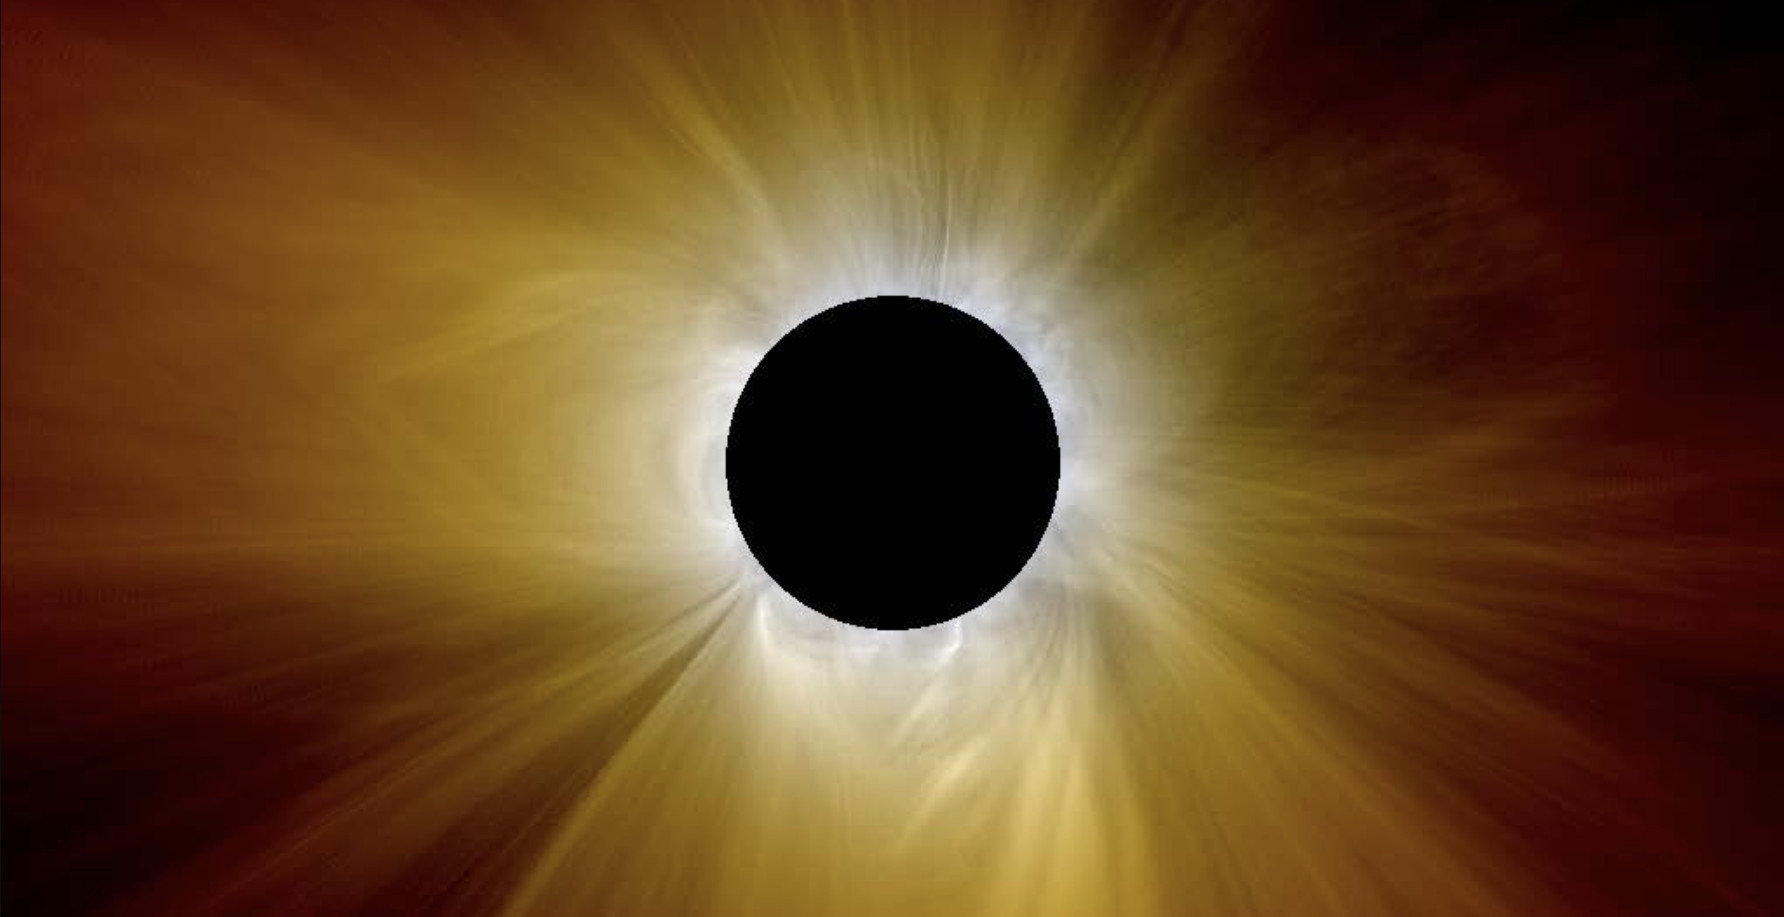 Photo of sun's corona during eclipse